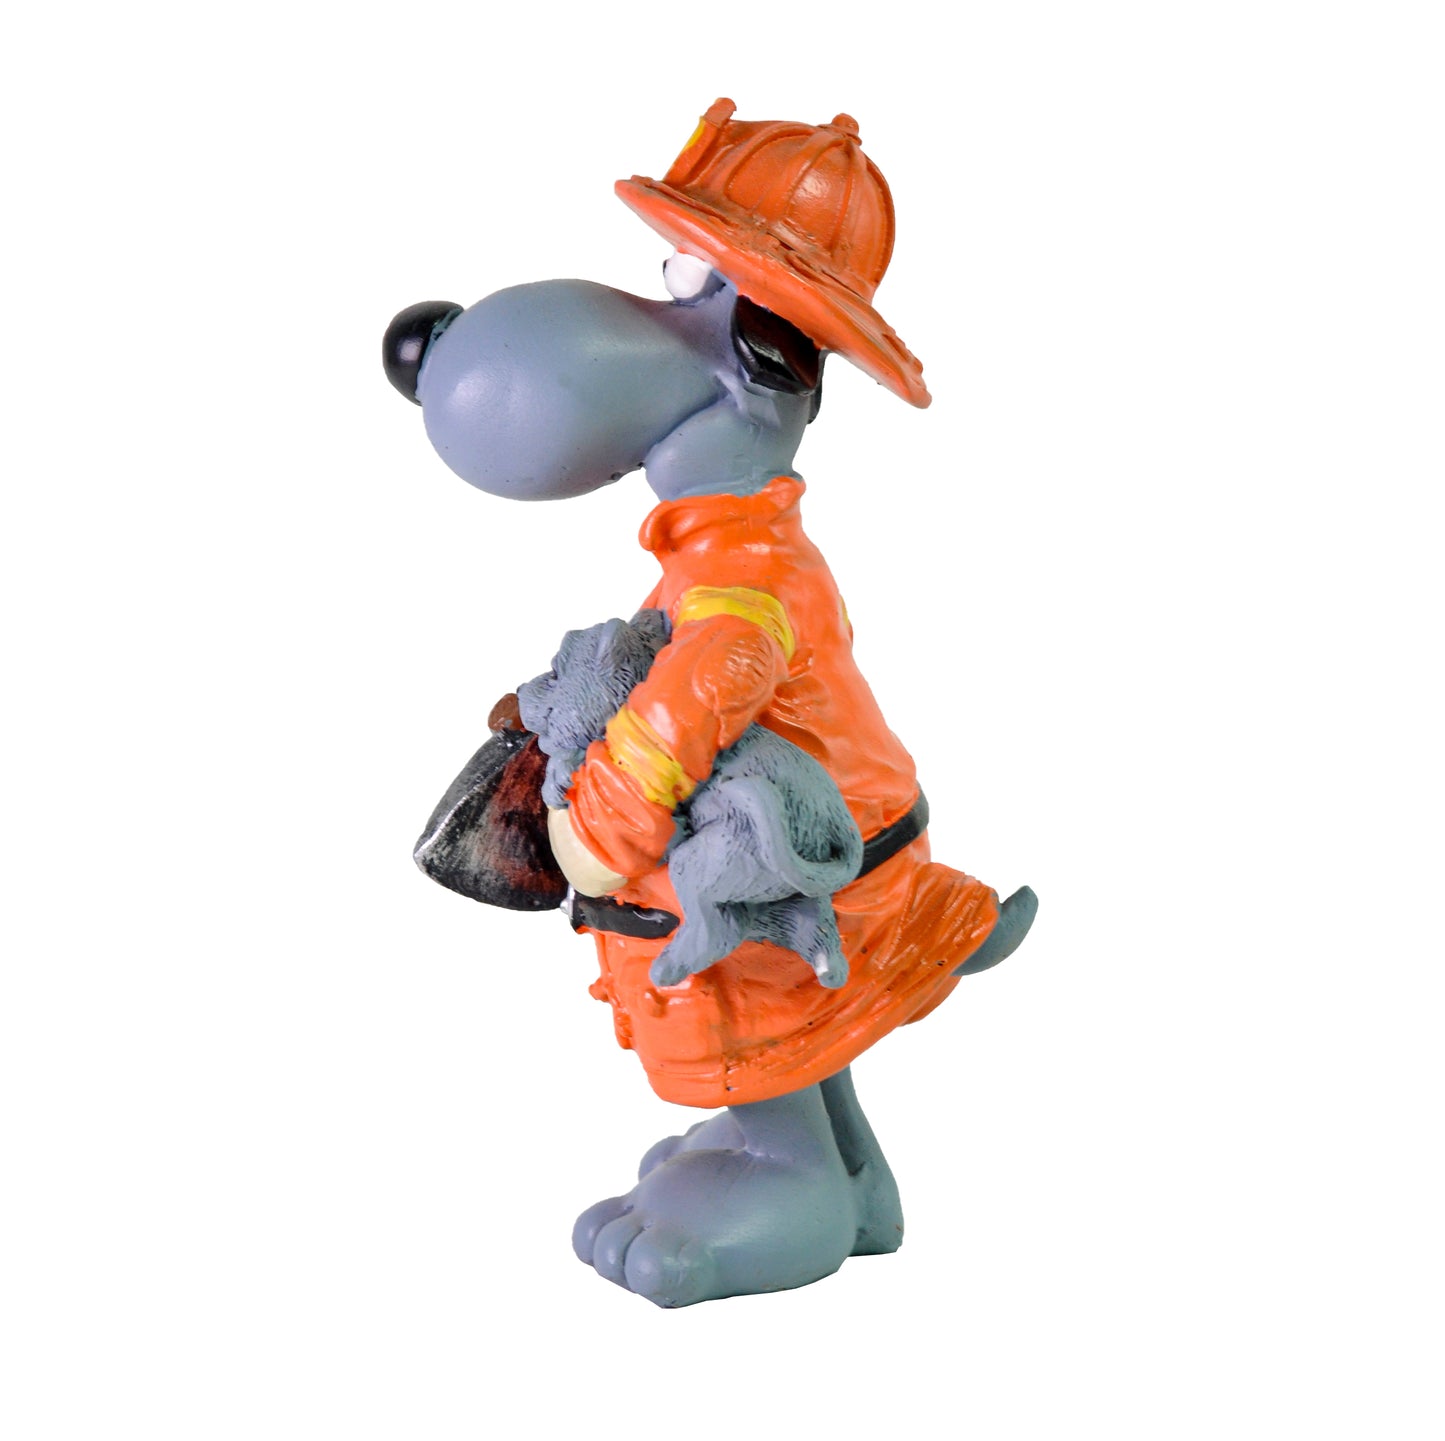 Fireman Dog Figurine by Crystal Castle®